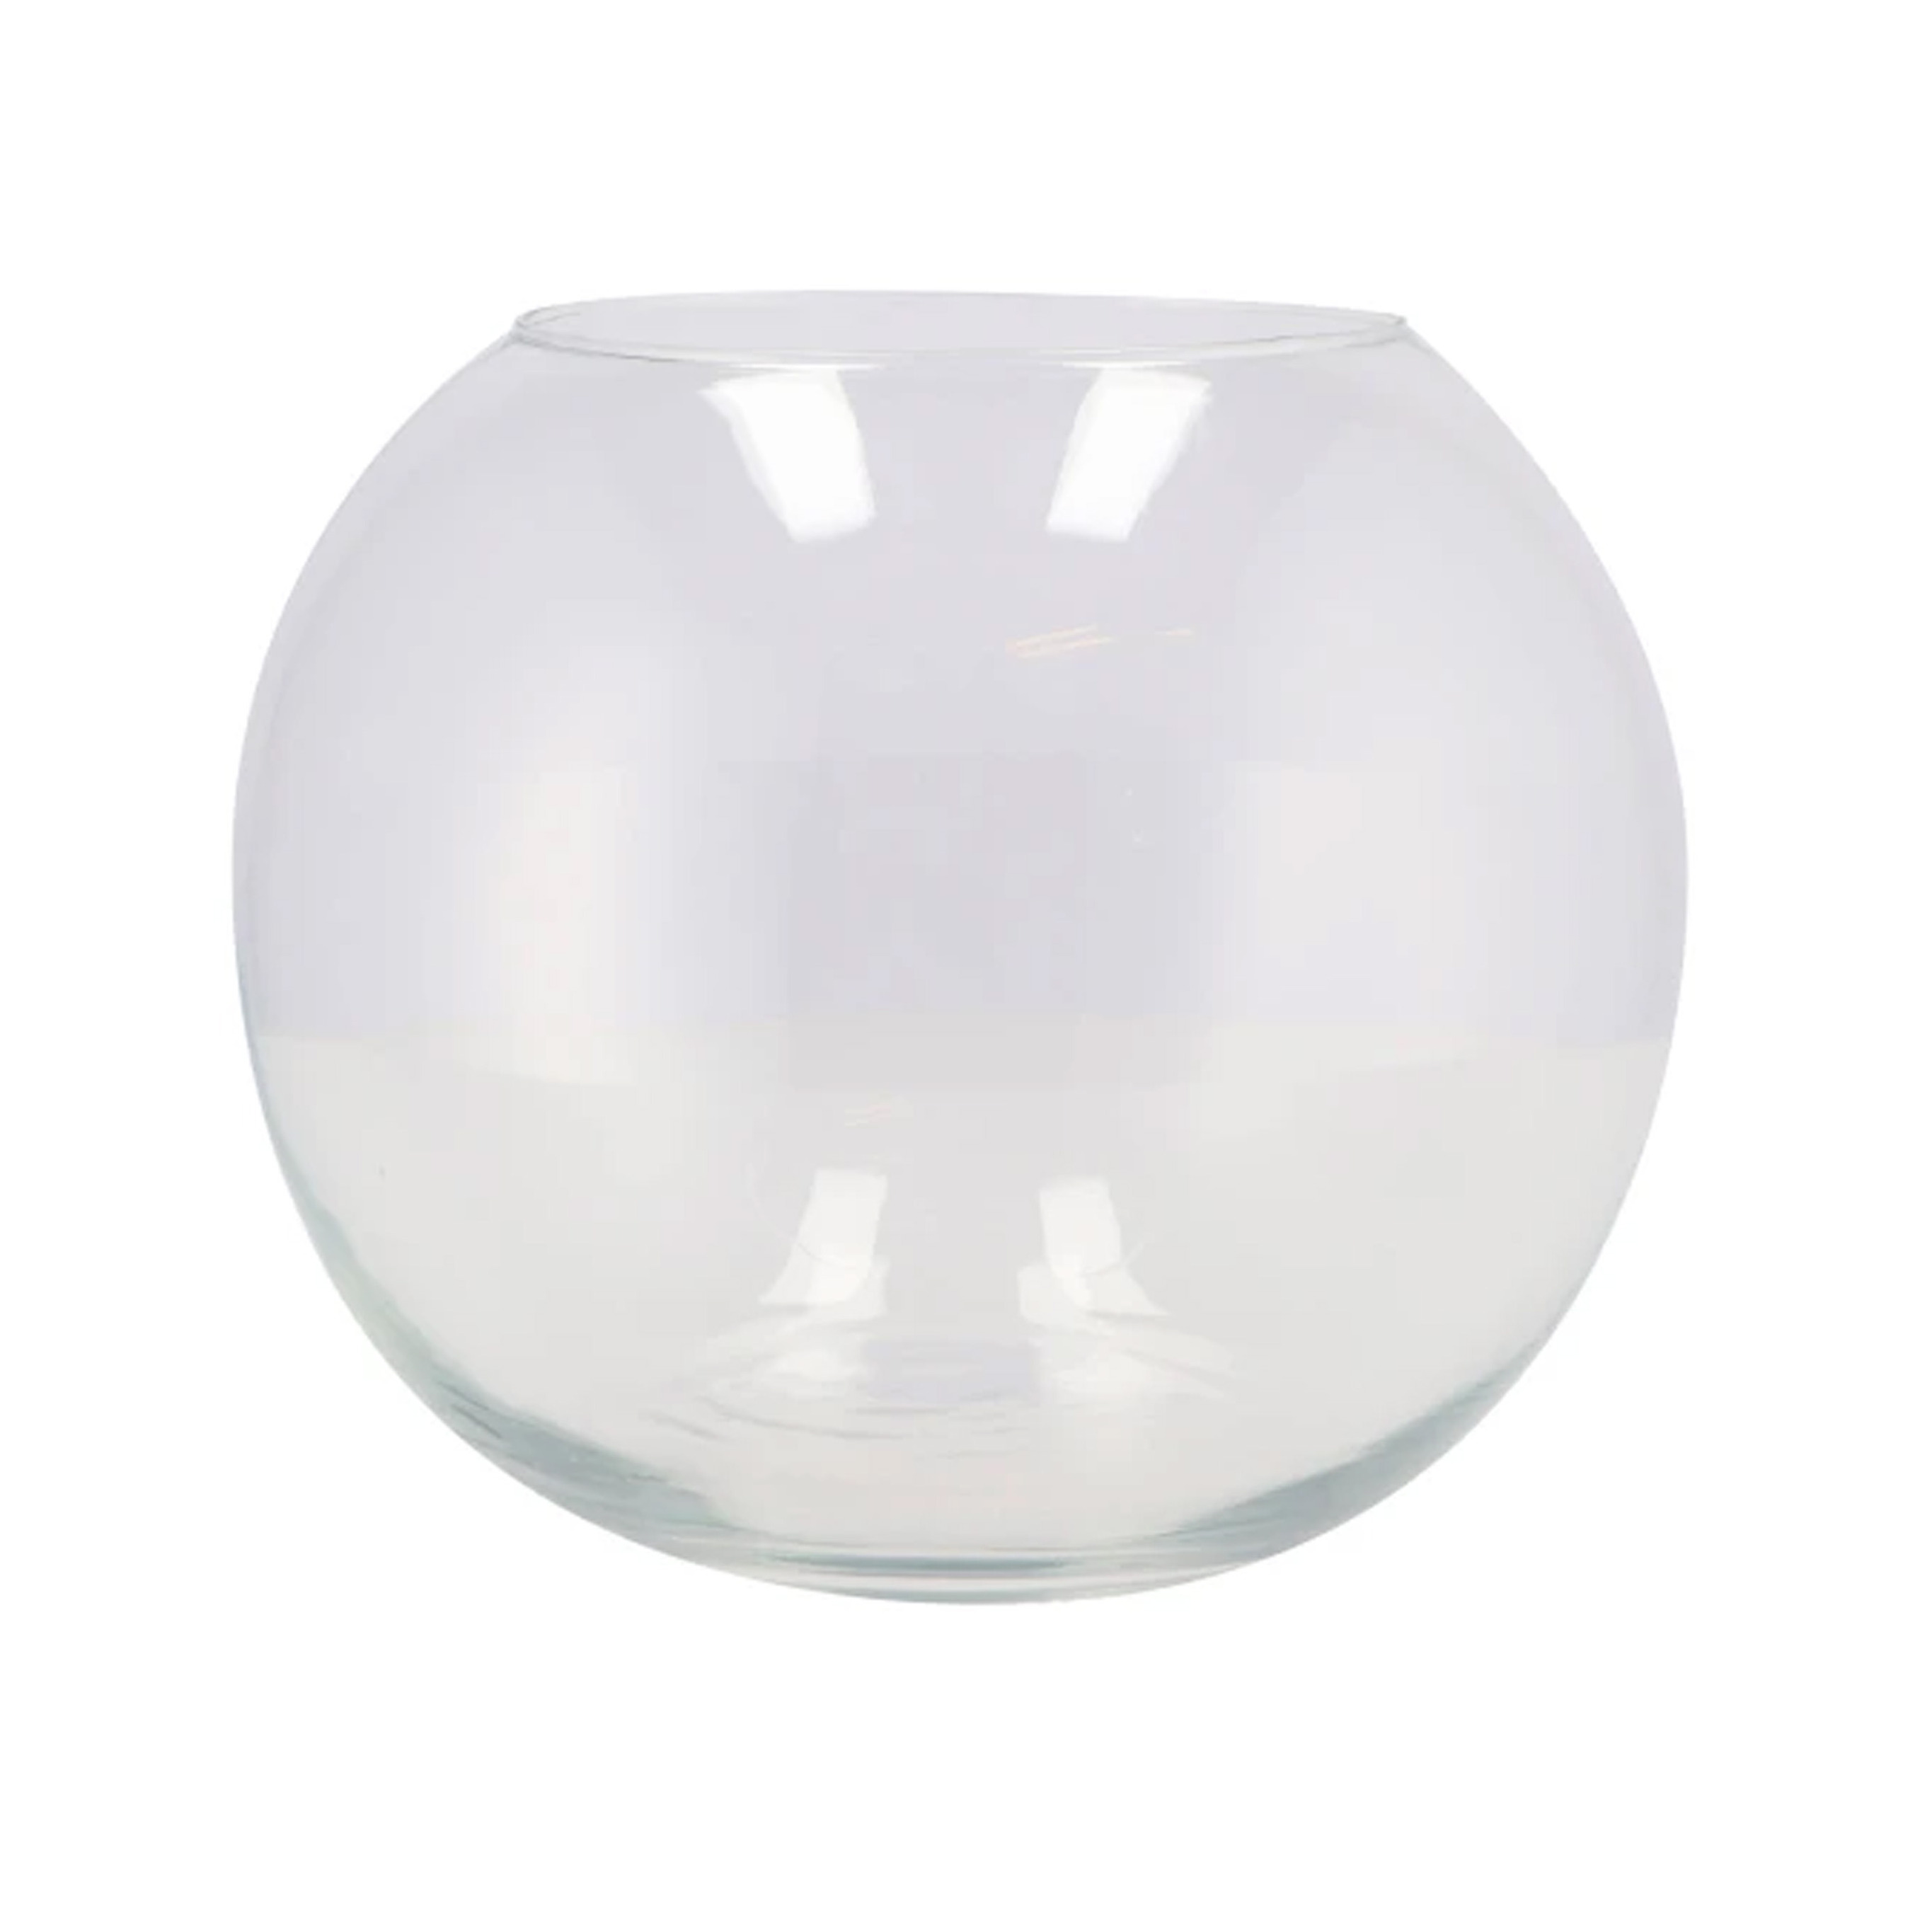 DK Design Bloemenvaas bol/rond model - transparant glas - D25 x H20 cm -